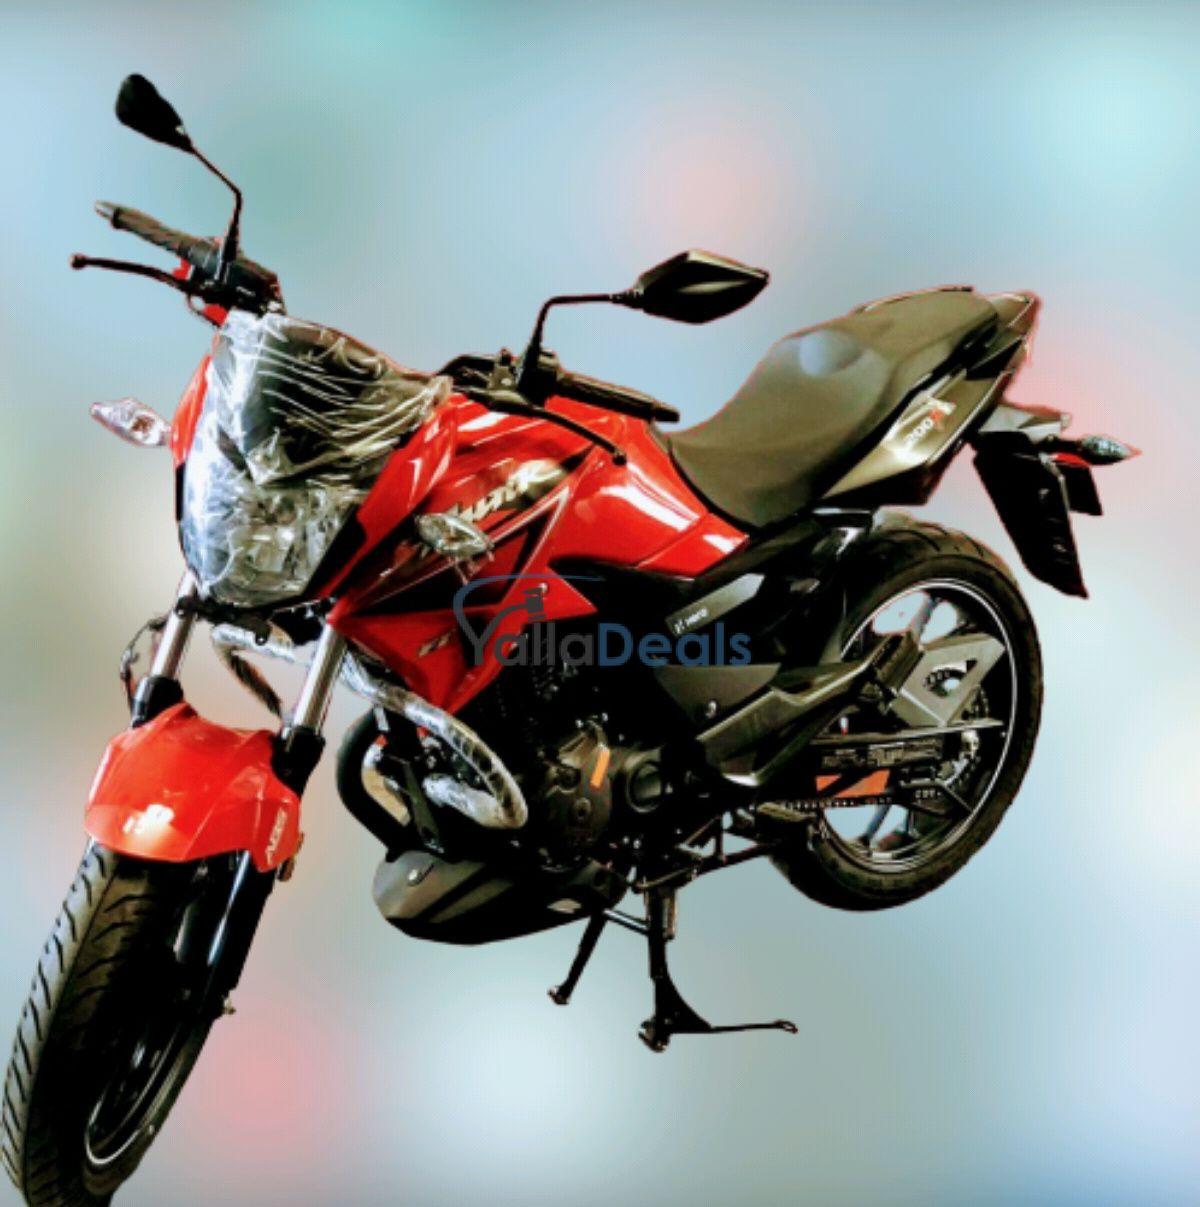 Hero Motorcycles In Uae For Sale Yalla Deals